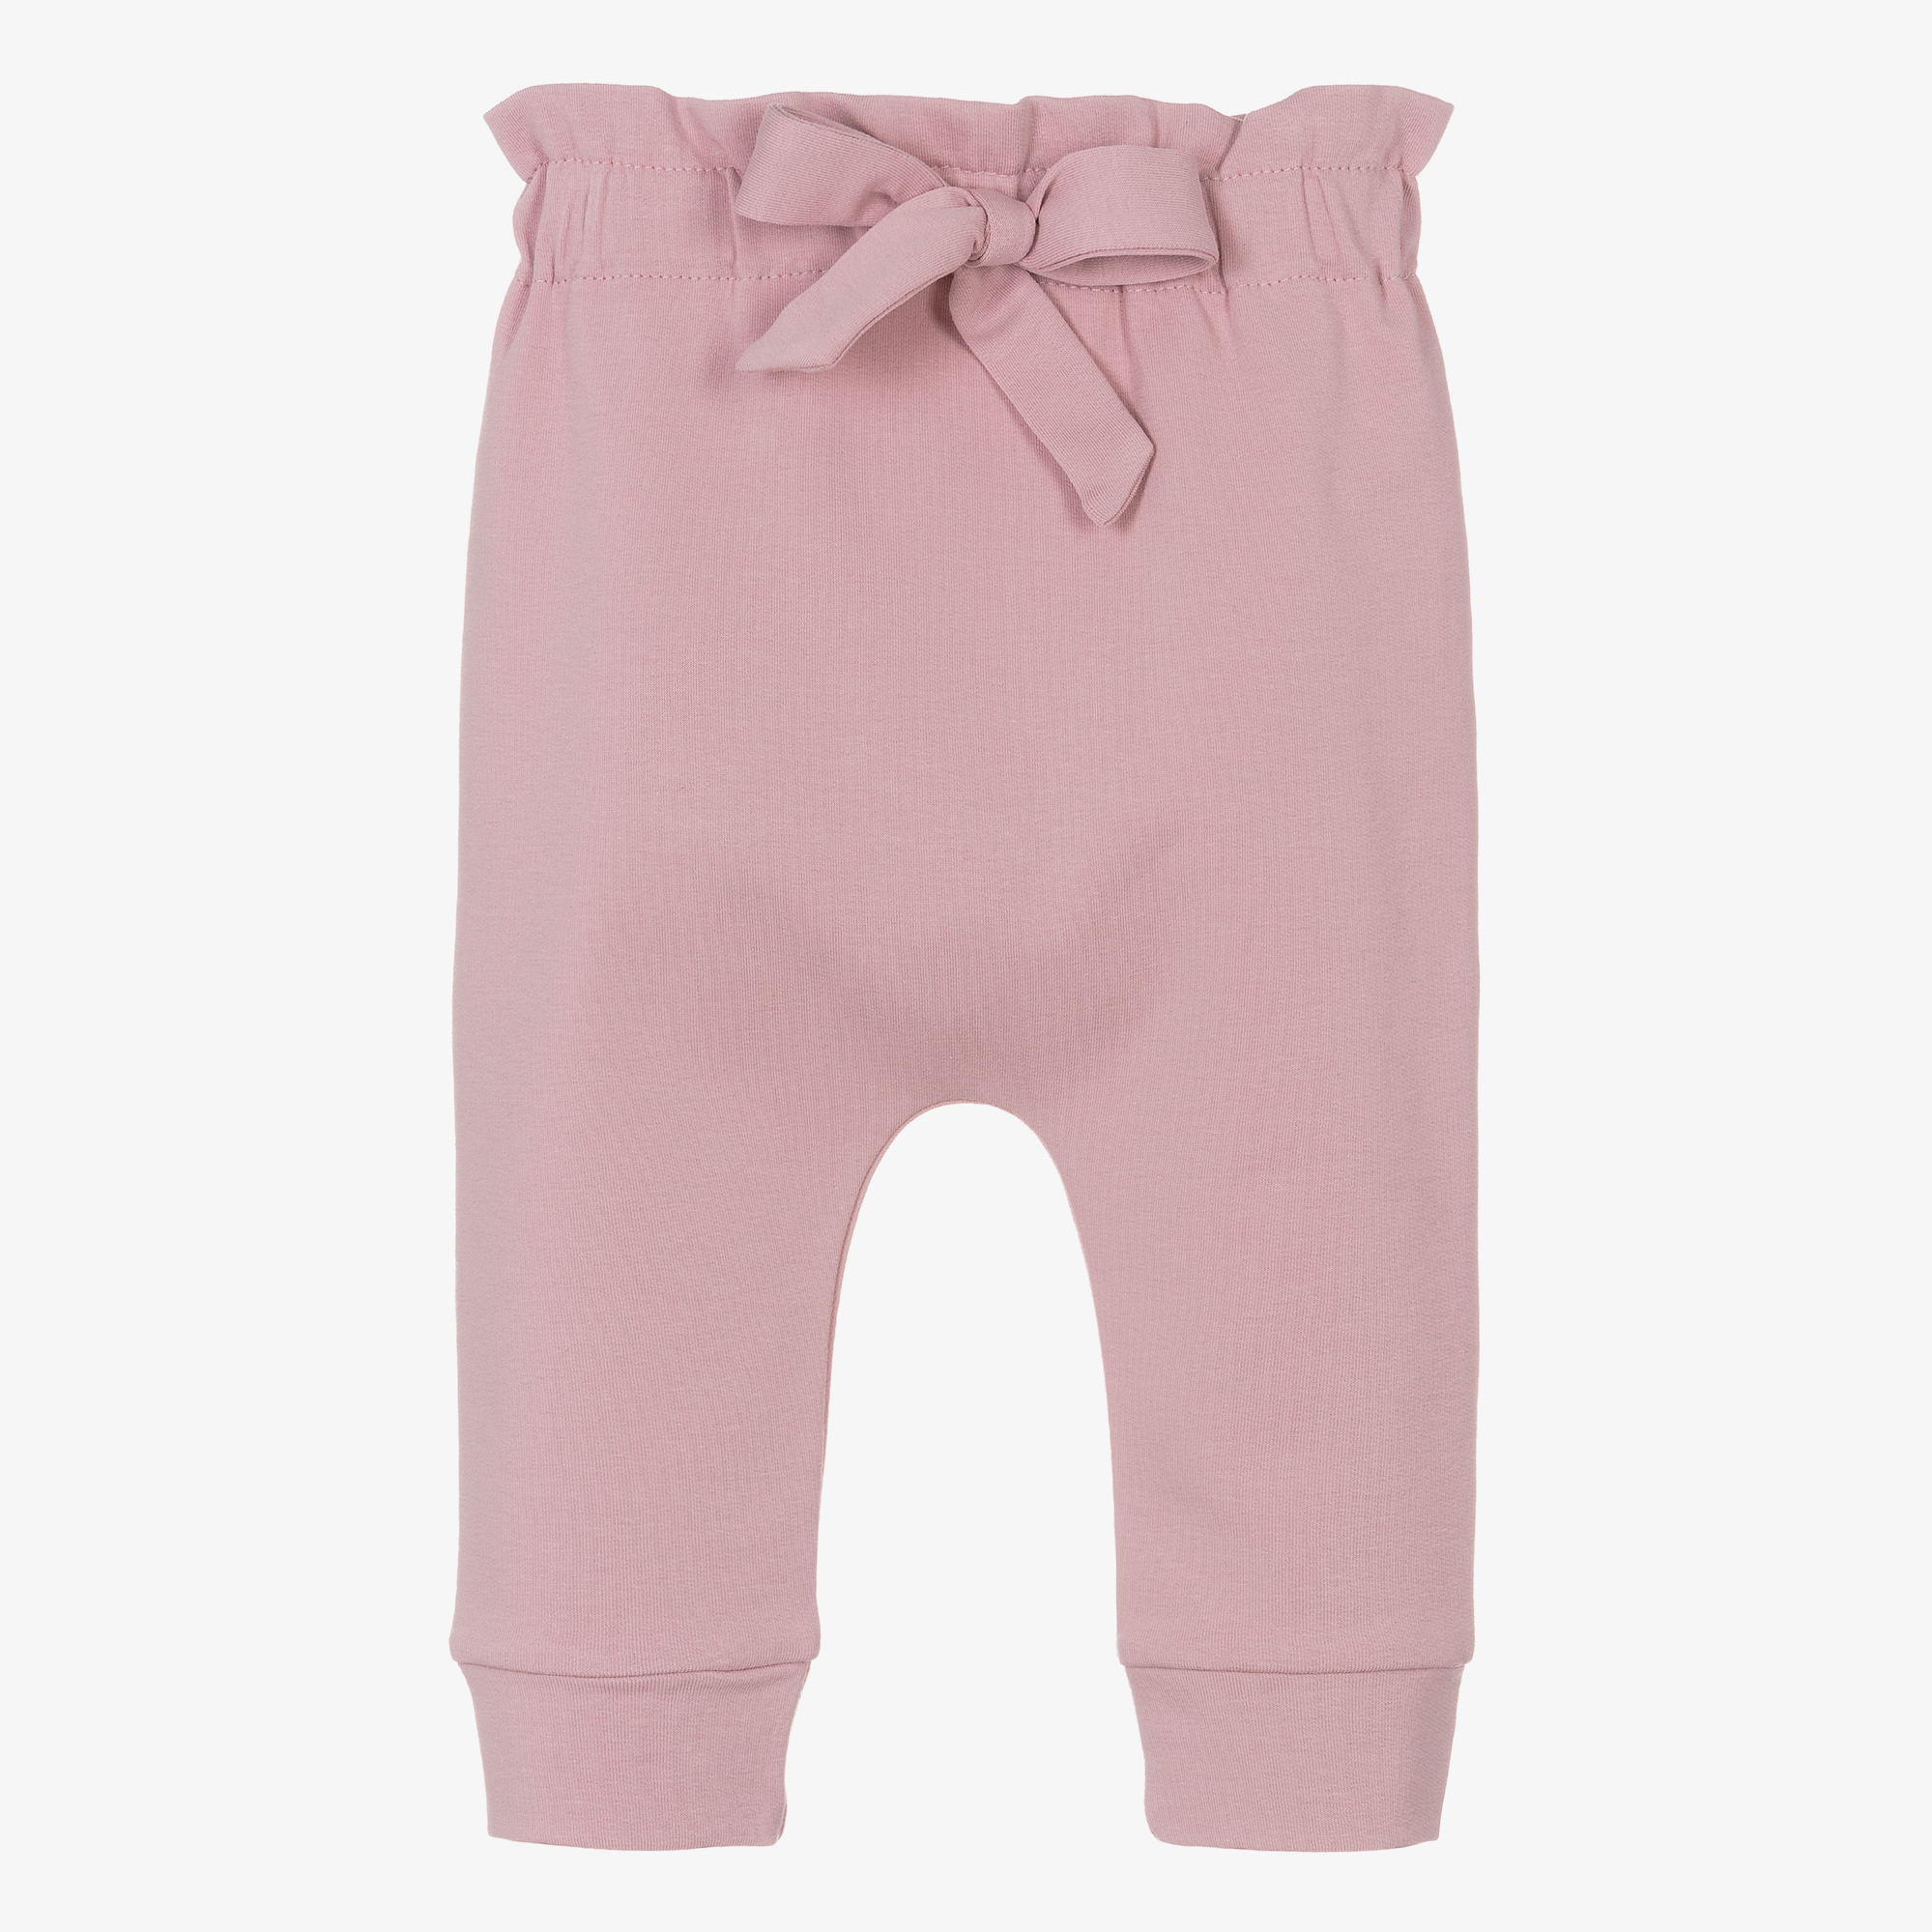 Sofija - Baby Girls Pink Cotton Frilly Pants